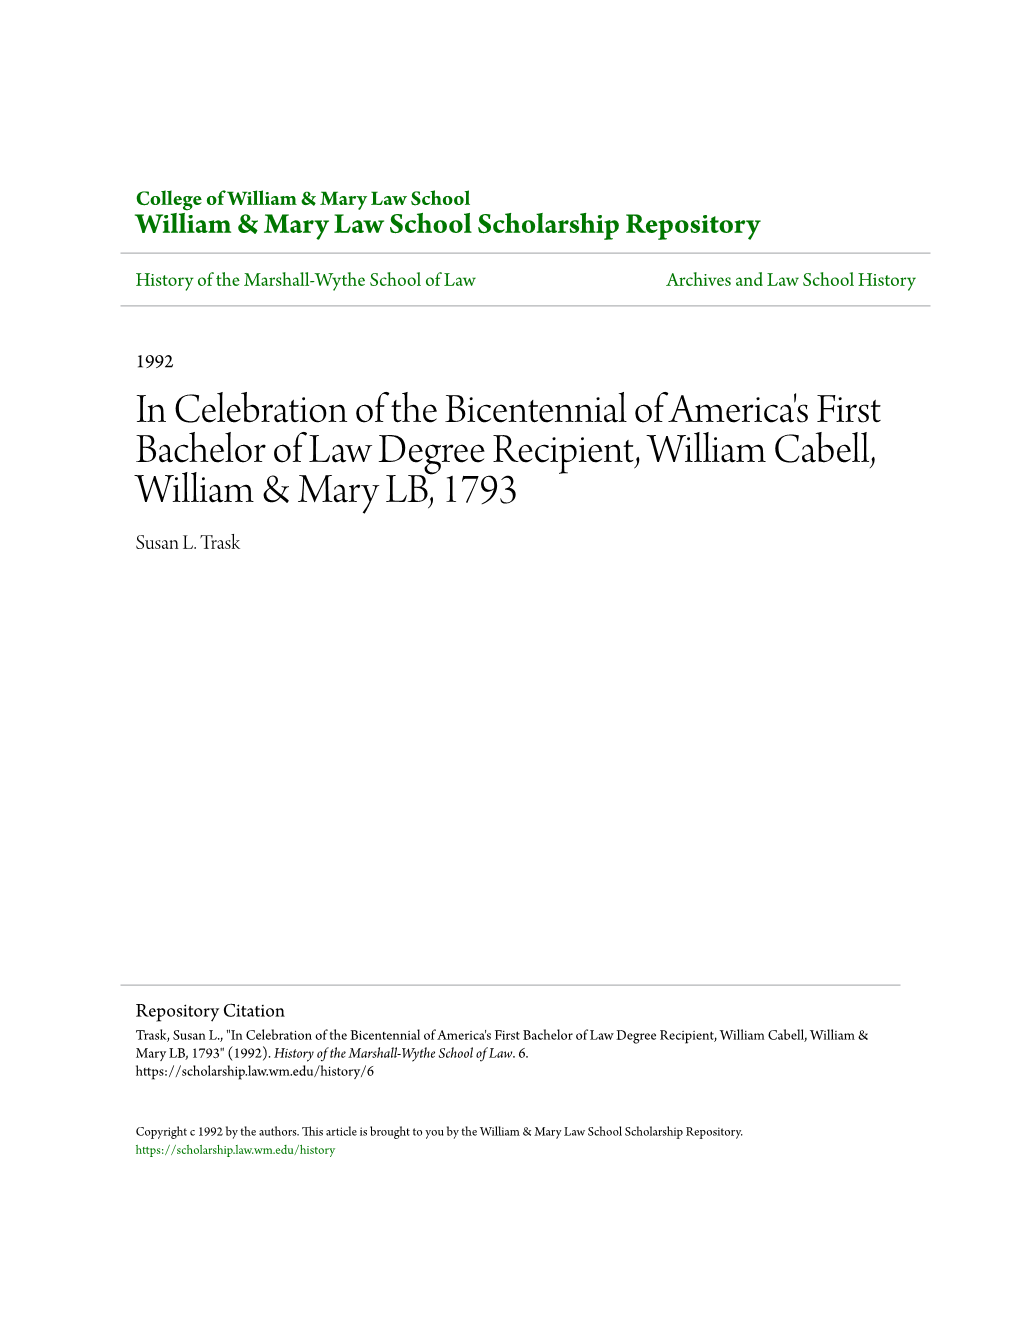 William & Mary Law School Scholarship Repository